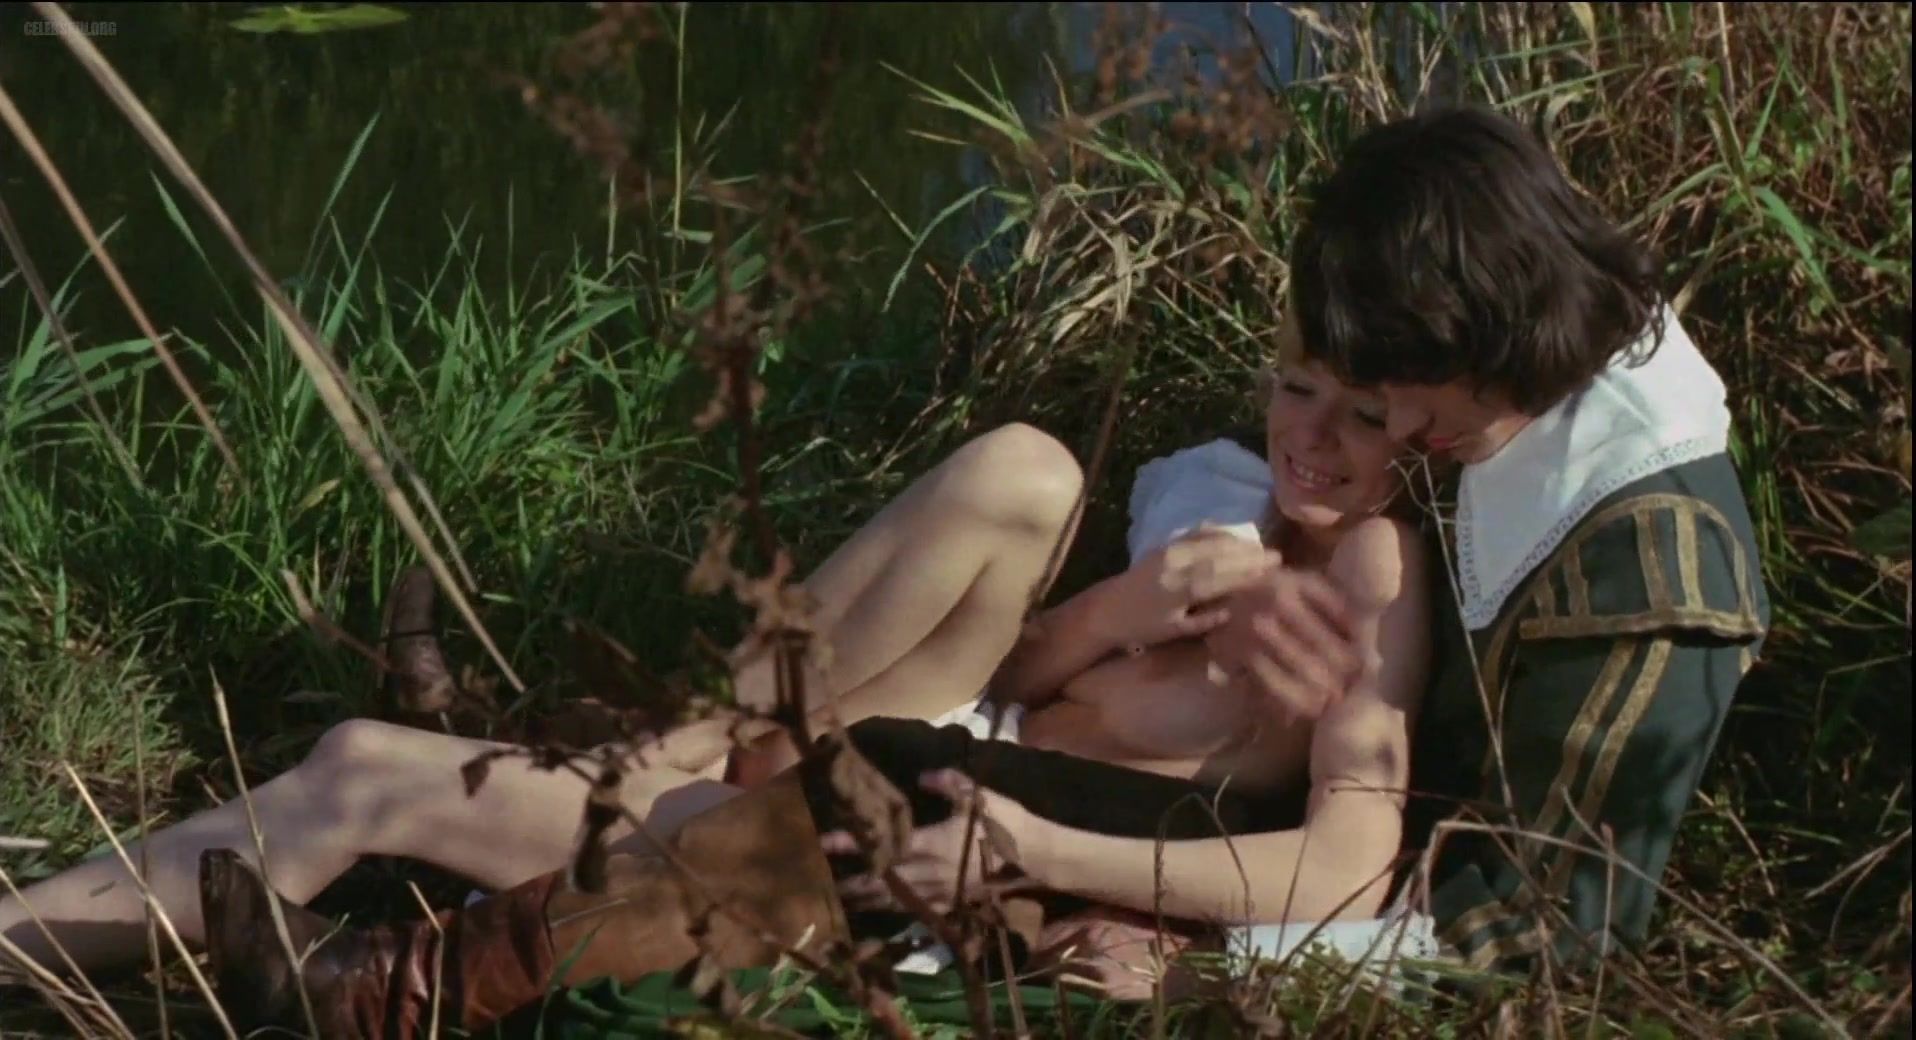 Gay Brokenboys Outdoor Sex scene with Ingrid Steeger from classic erotic movie "Die Sexabenteuer Der Drei Musketiere" (1971) Maledom